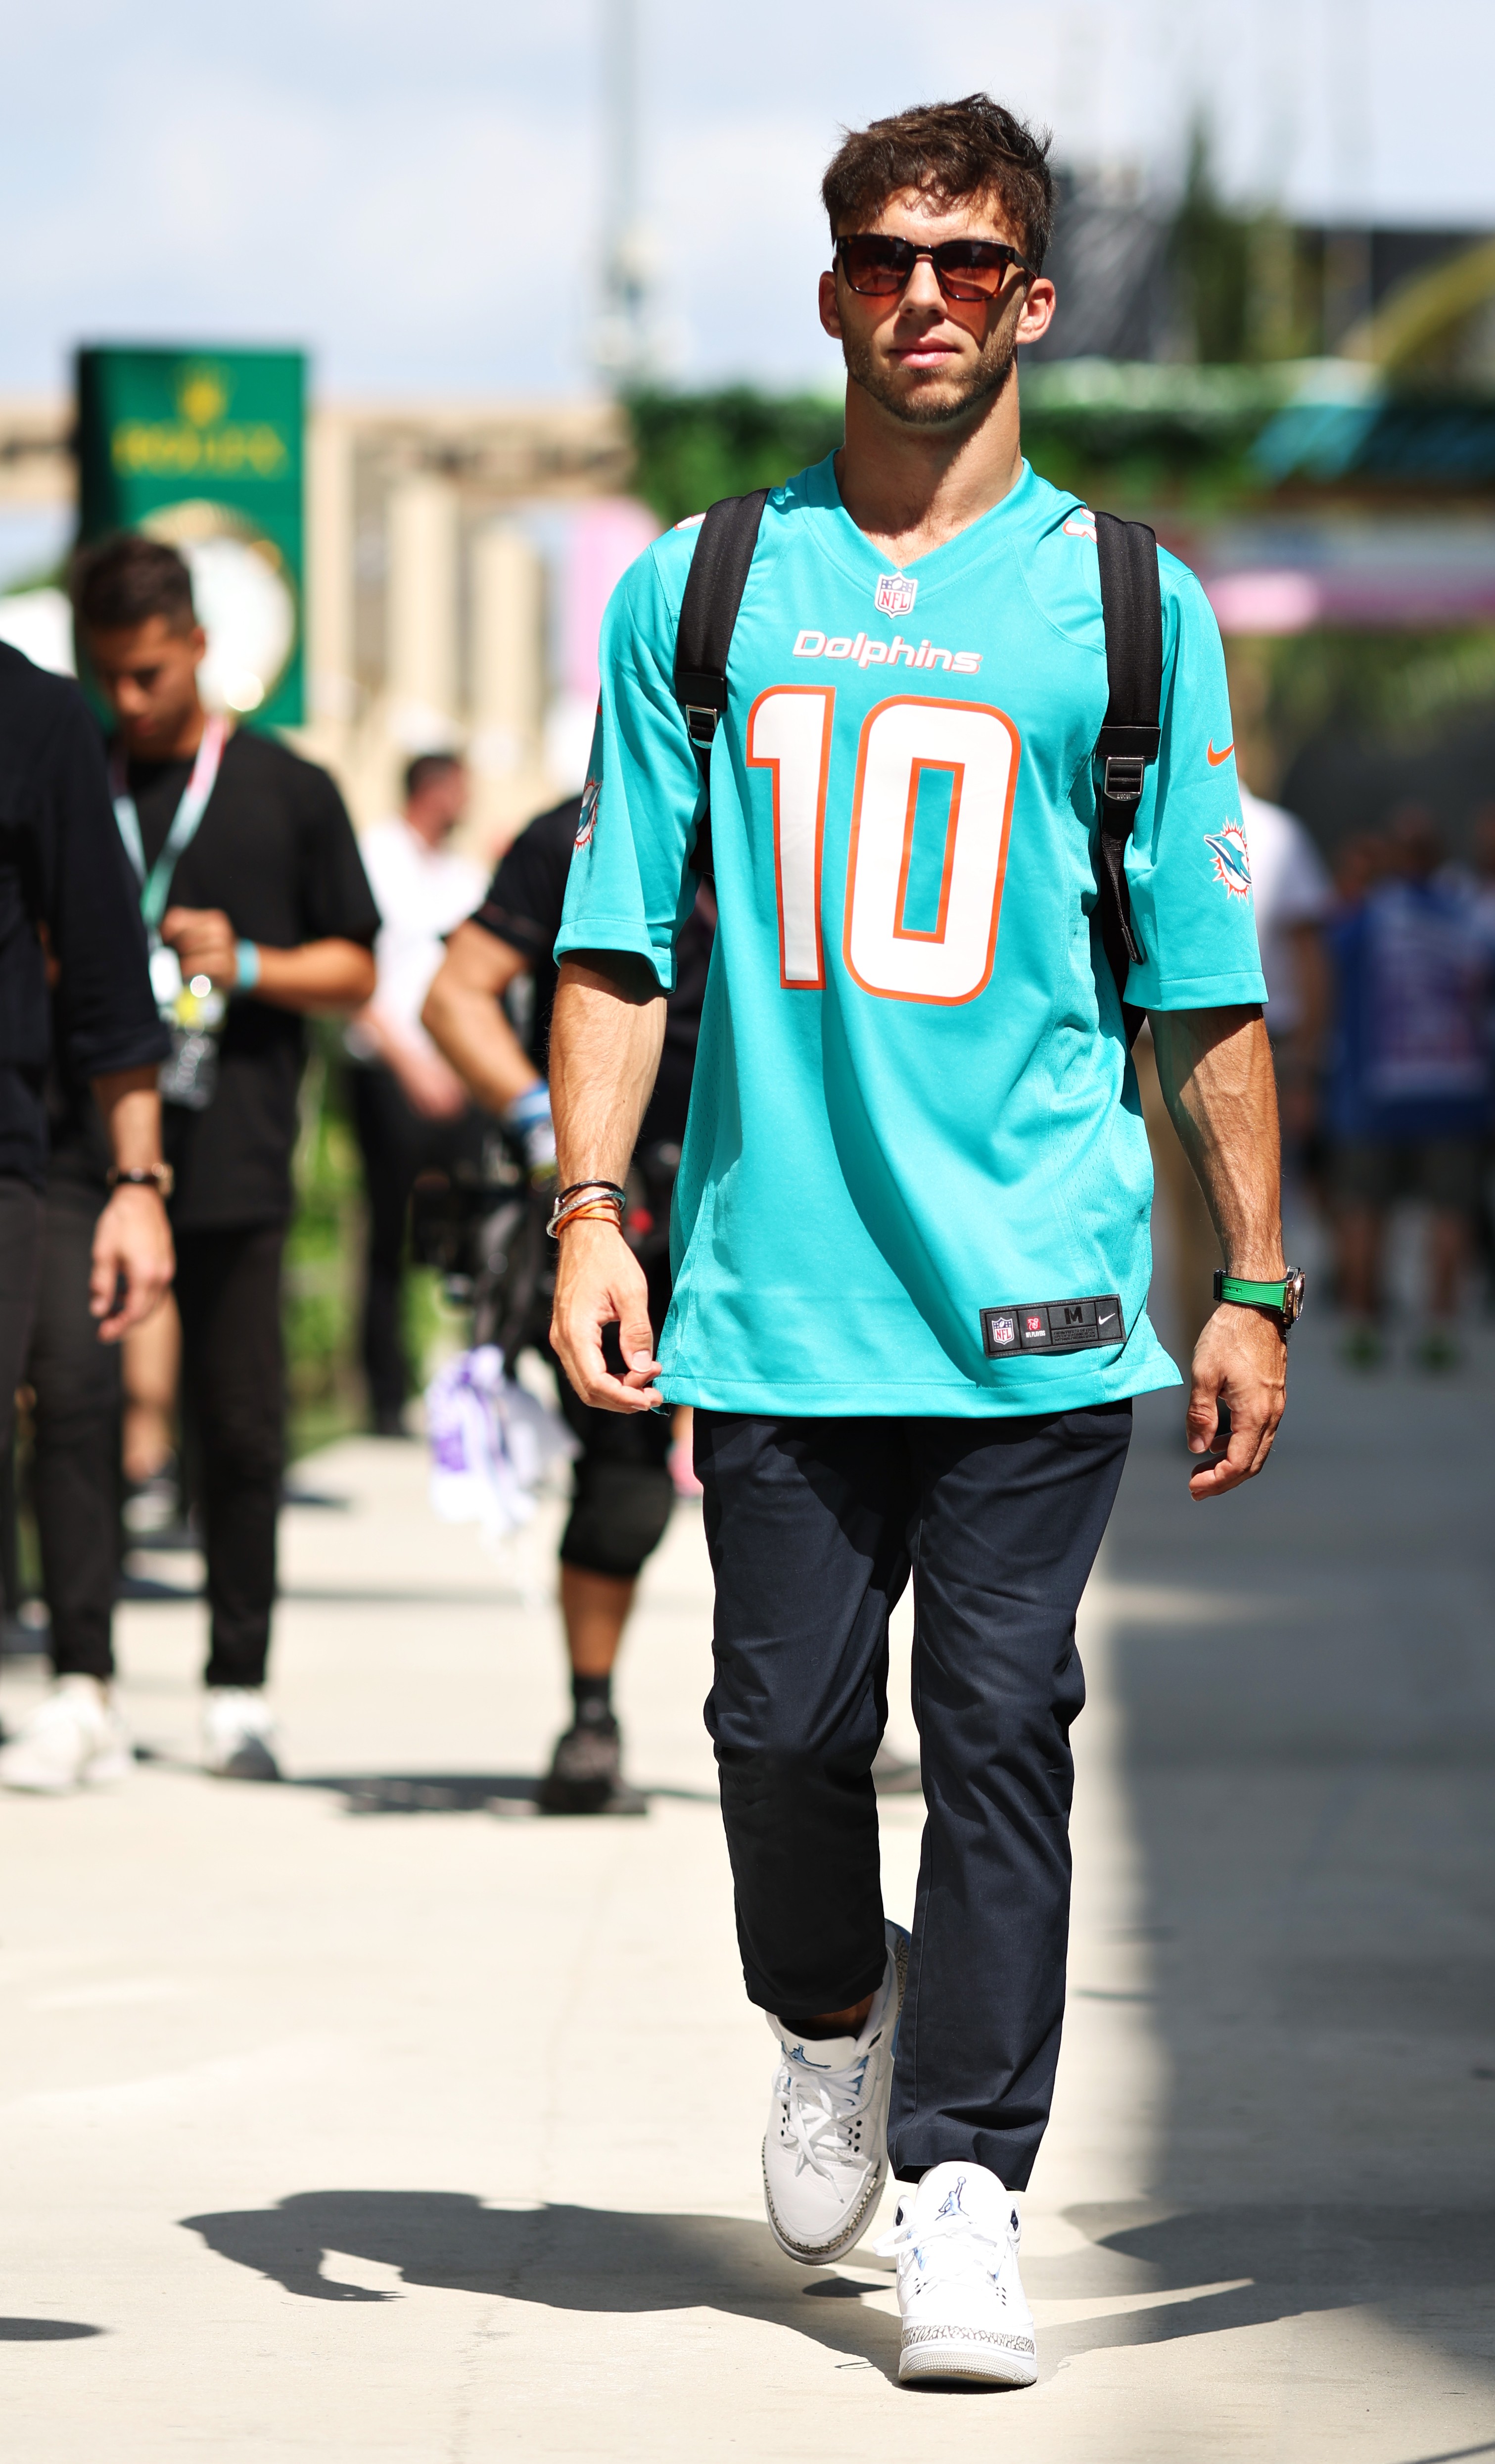 Pierre Gasly com camisa dos Miami Dolphins, da NFL (Foto: Getty Images)